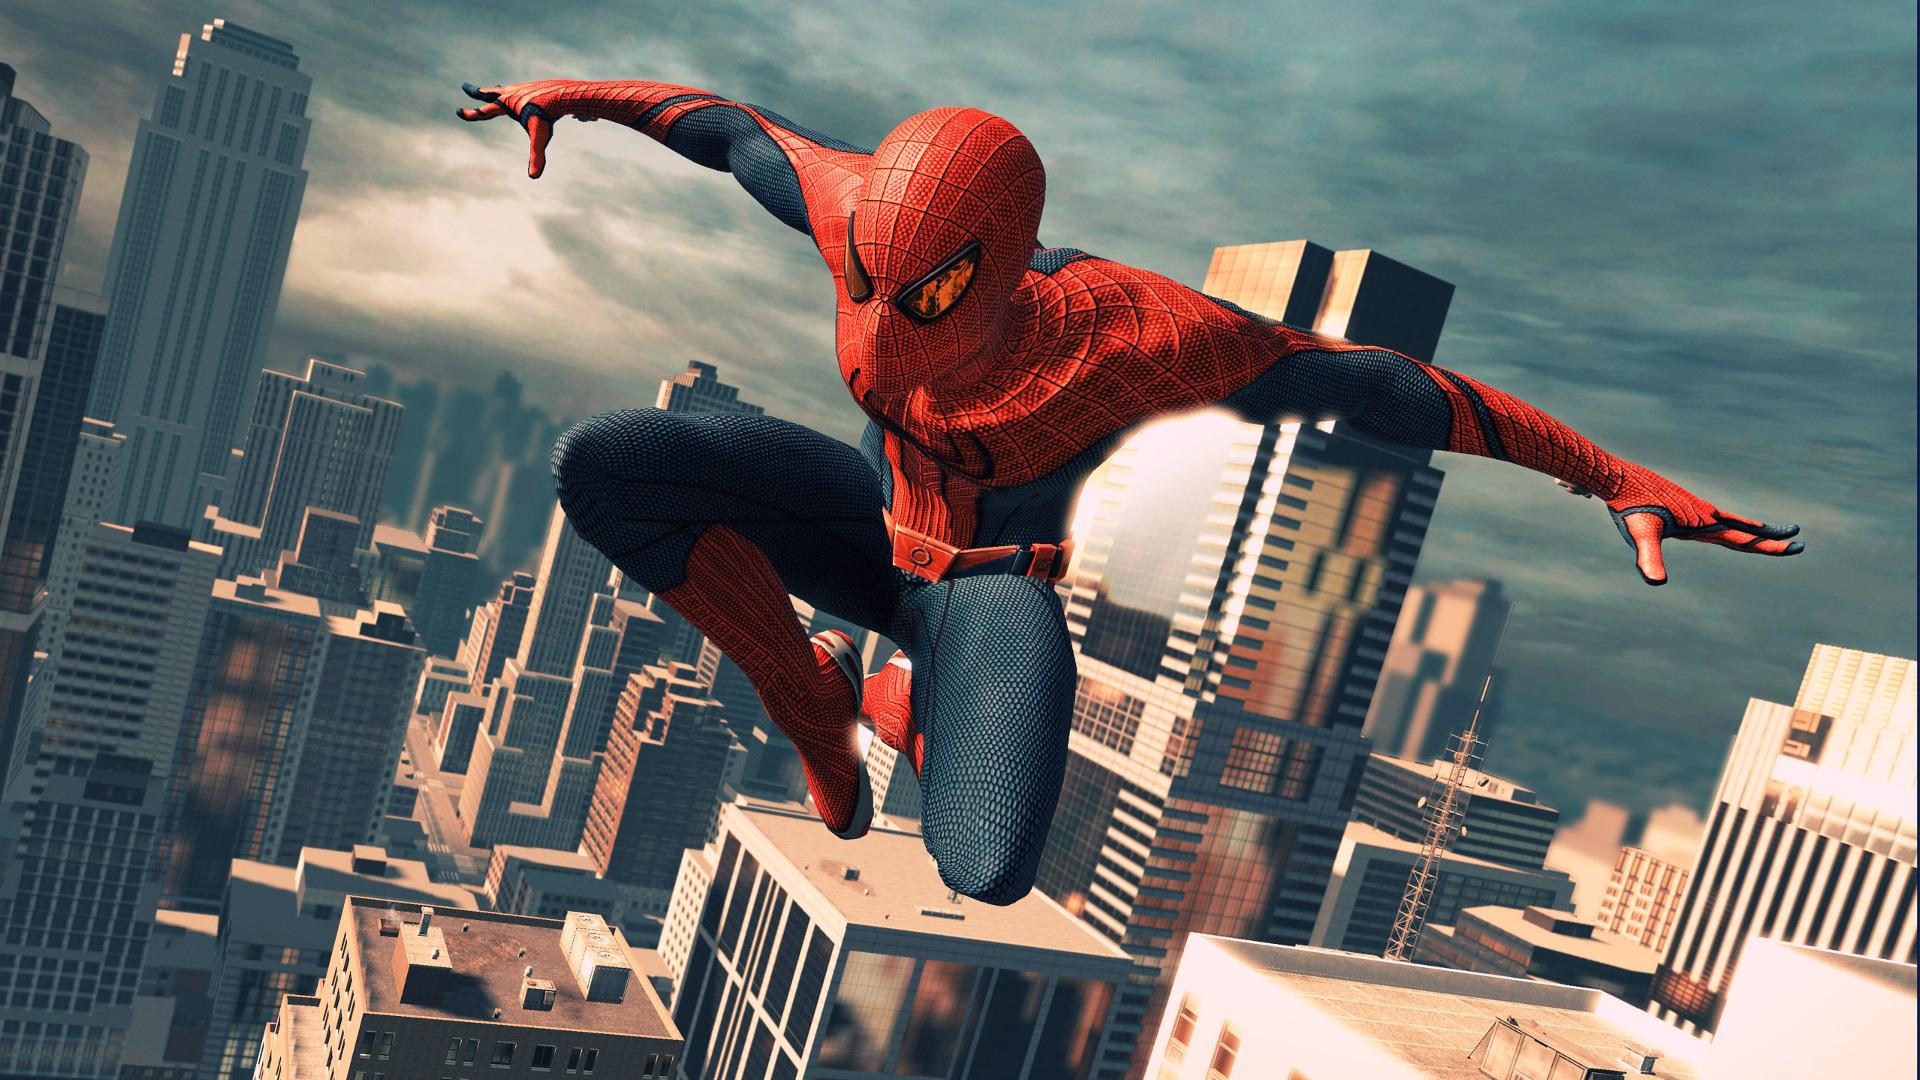 THE AMAZING SPIDERMAN Spiderman jumping wallpaper